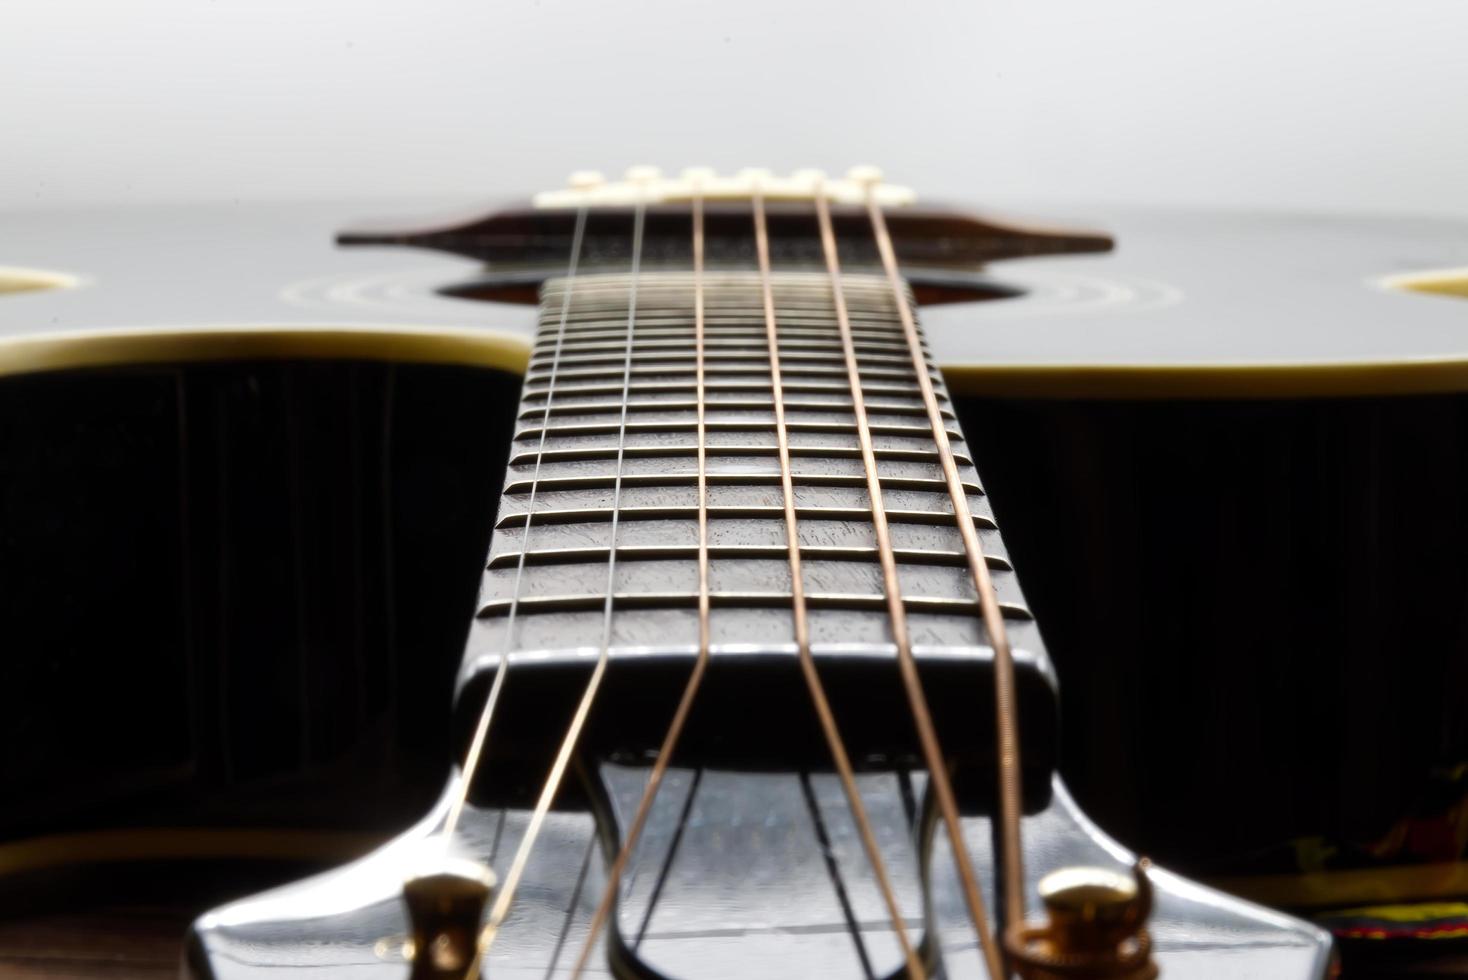 guitarra acústica negra aislada en fondo blanco, centrada en el diapasón foto